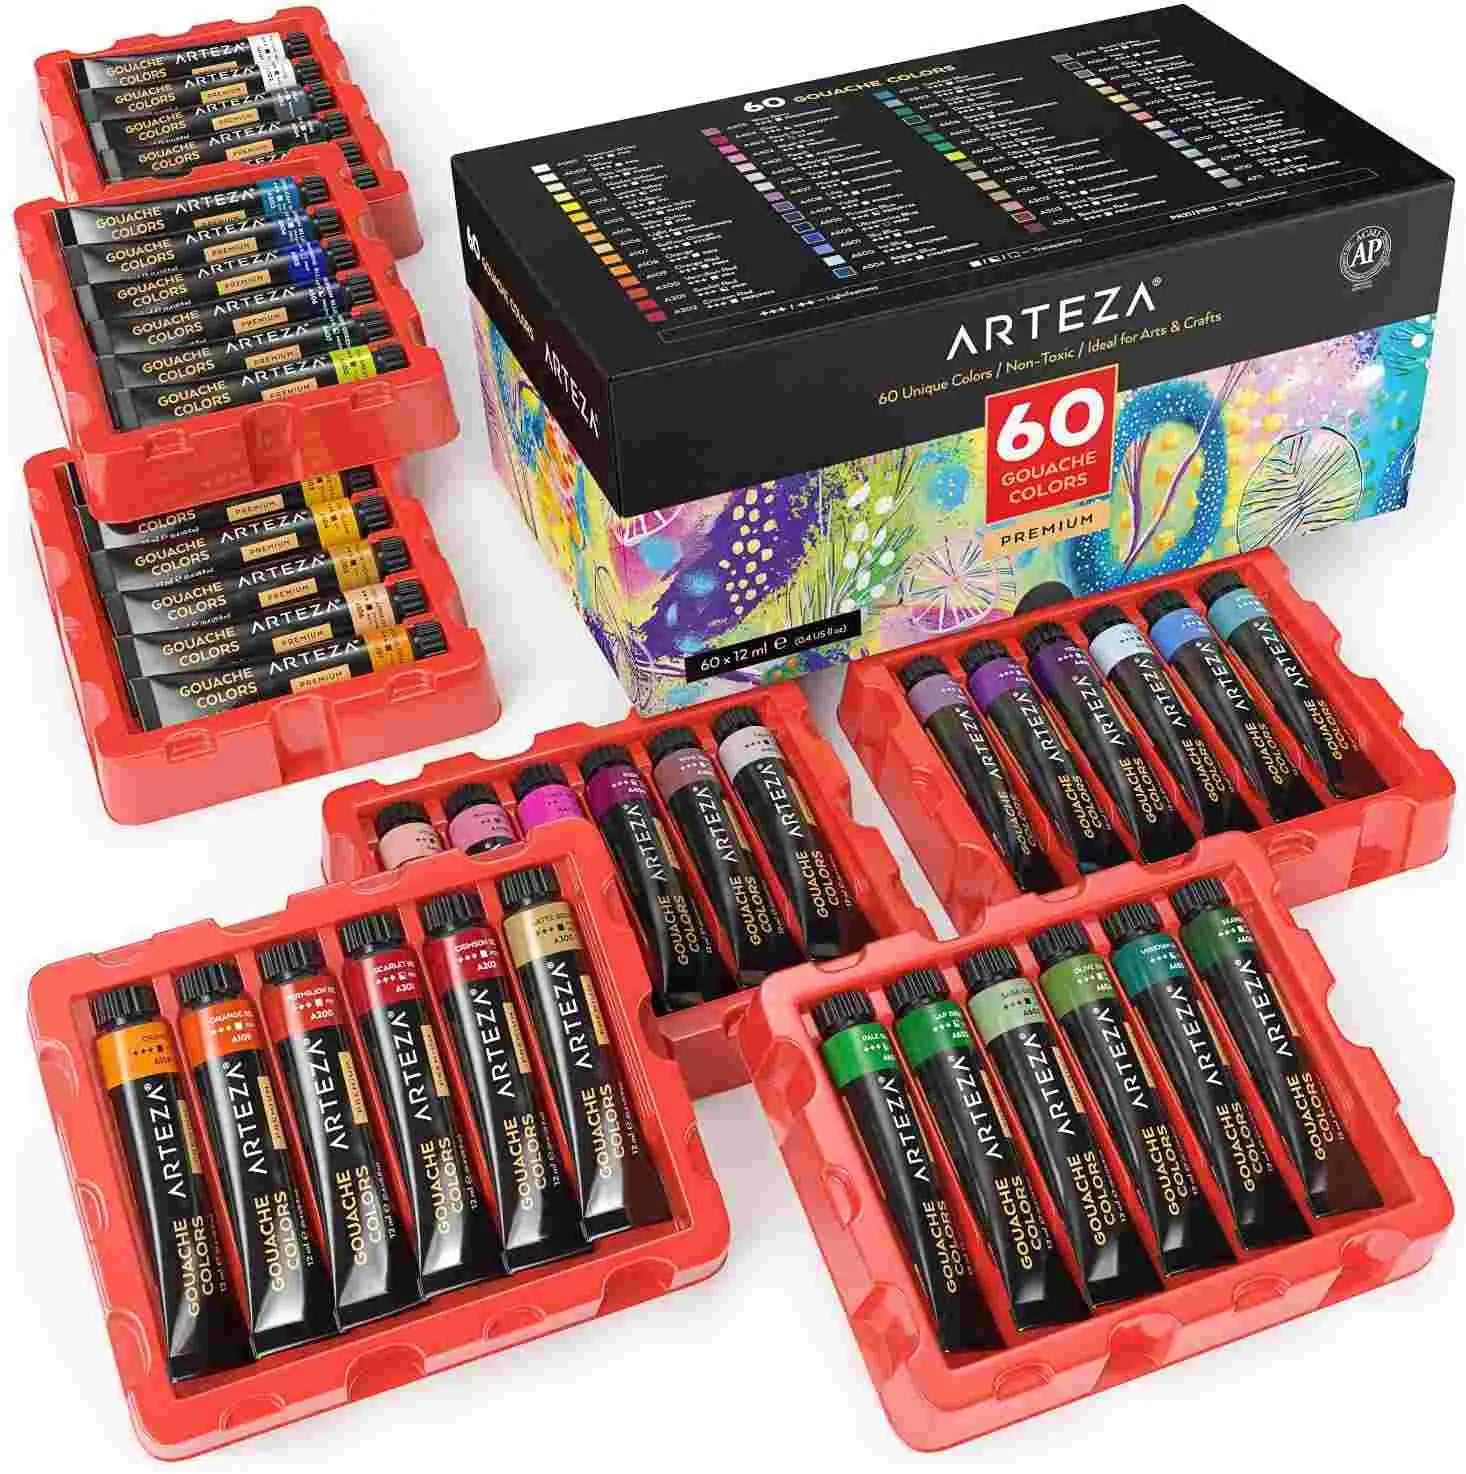 ARTEZA Gouache Paint Set, Set of 60 Colors in 12ml Tubes, Premium Gouache Artist Paint for Professionals & Students, Ideal for Canvas and Paper, Complete Art Supplies for Vibrant Creations Arteza